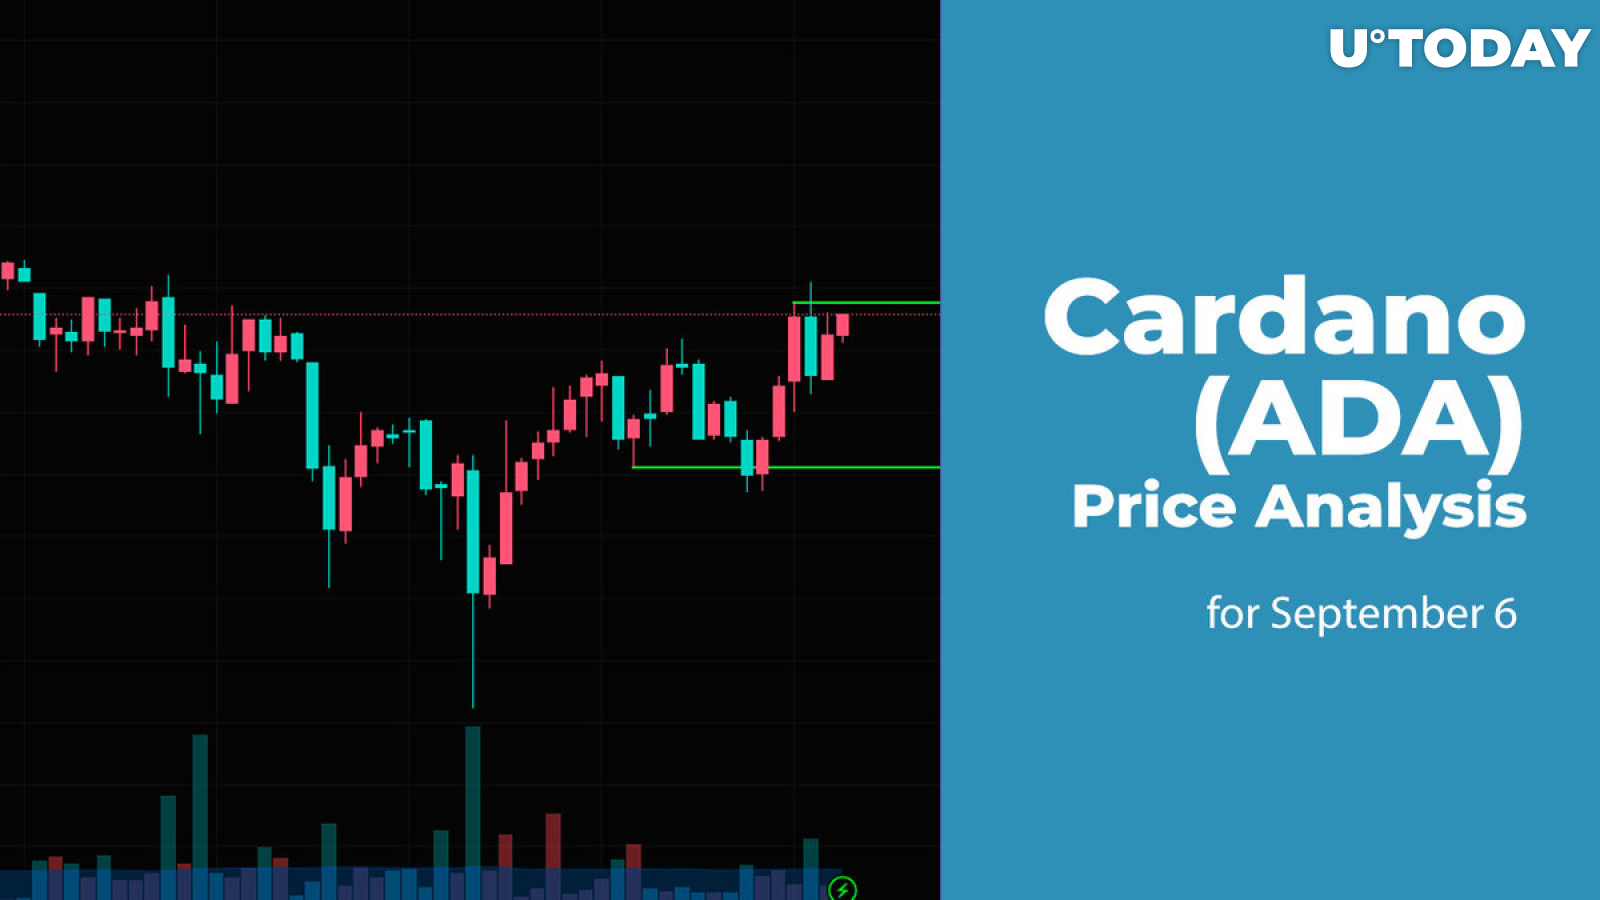 Cardano (ADA) Price Analysis for September 6